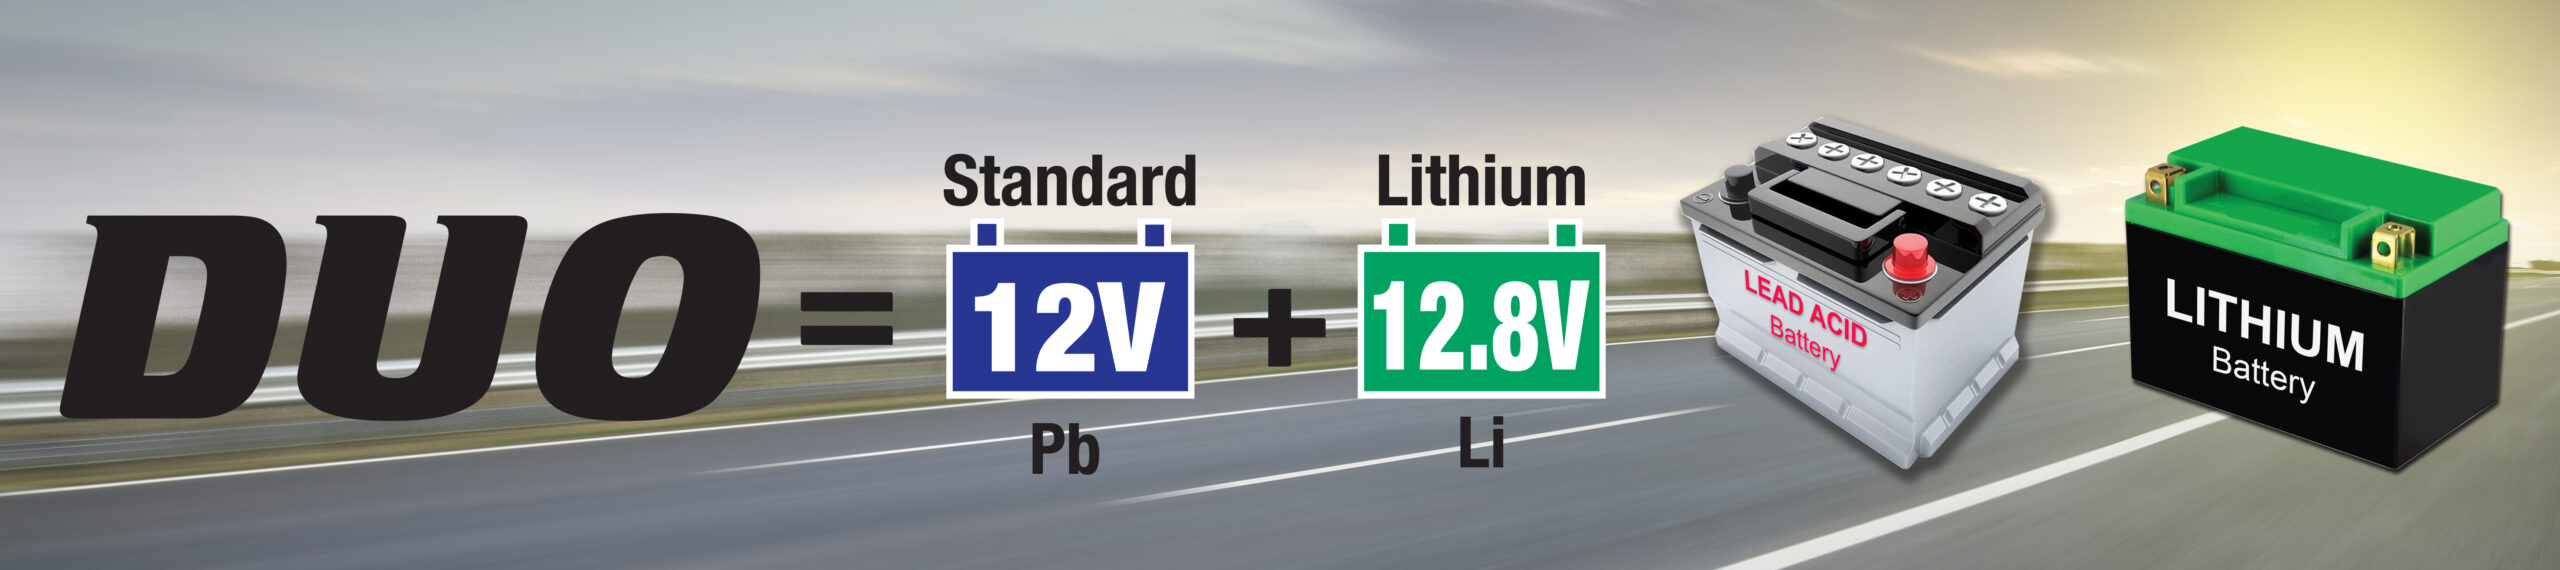 DUO significa standard 12V Pb e Litio 12.8V Li